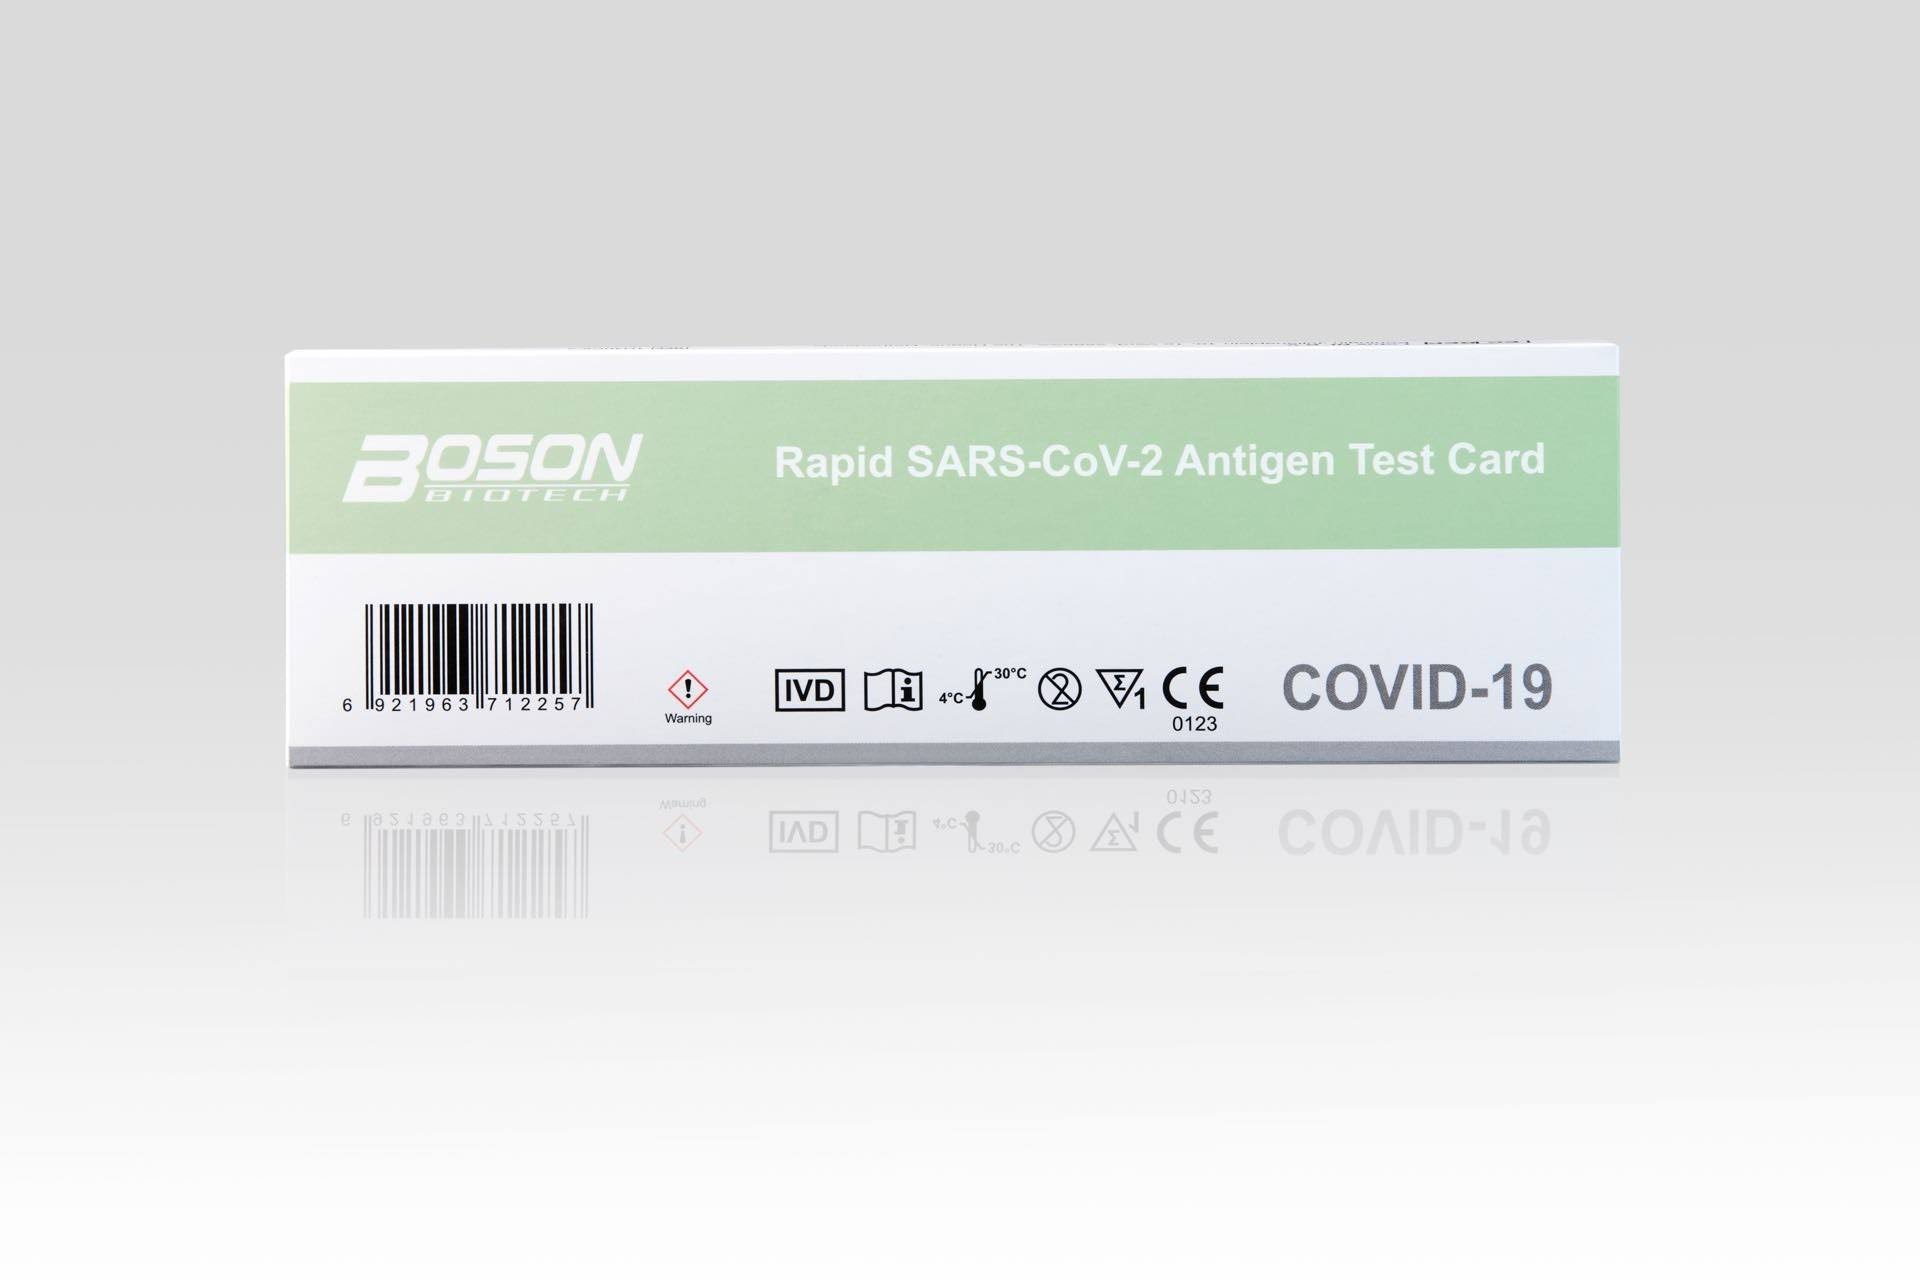 Boson - Rapid SARS-CoV-2 Antigen Test Card